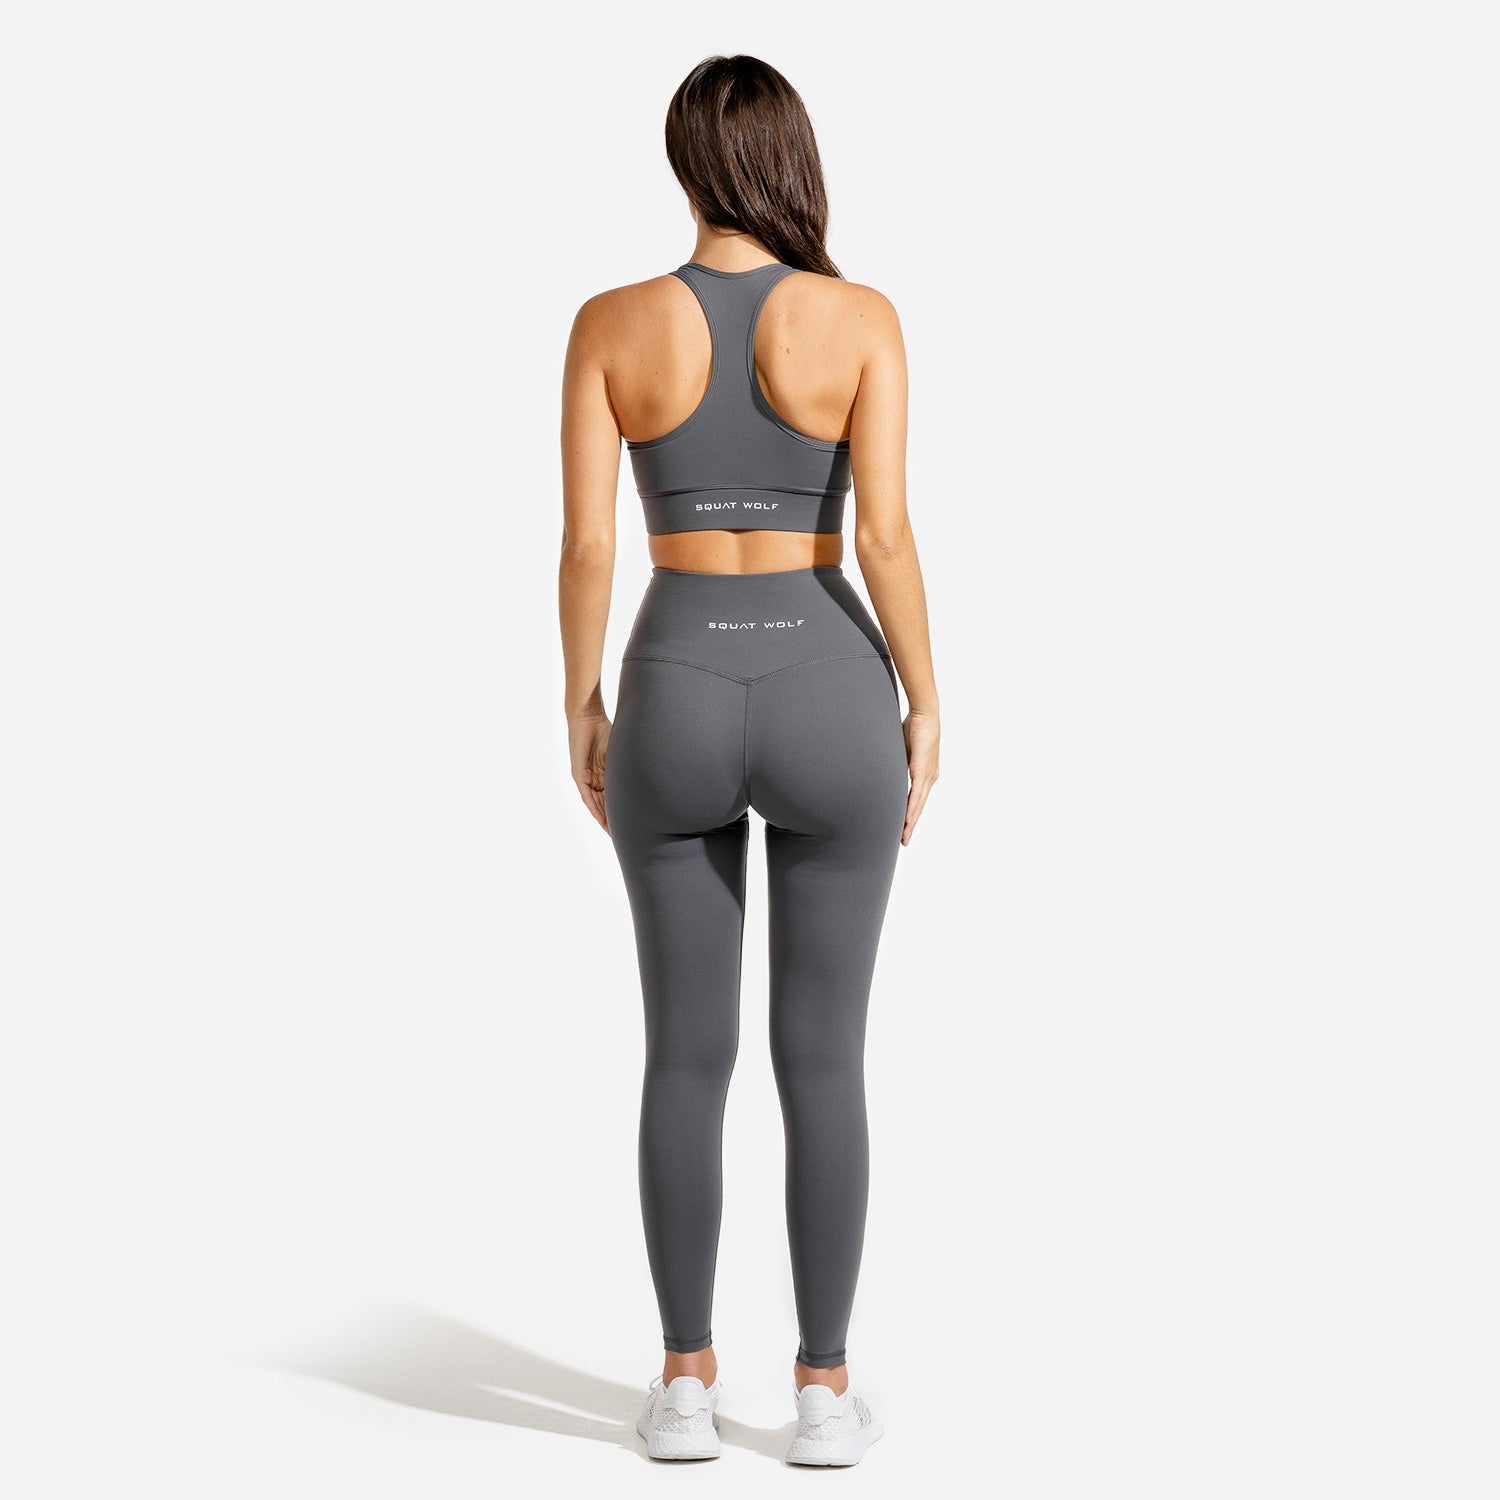 SJLS Length Leggings Women Bare Squat Proof Workout Training Yoga